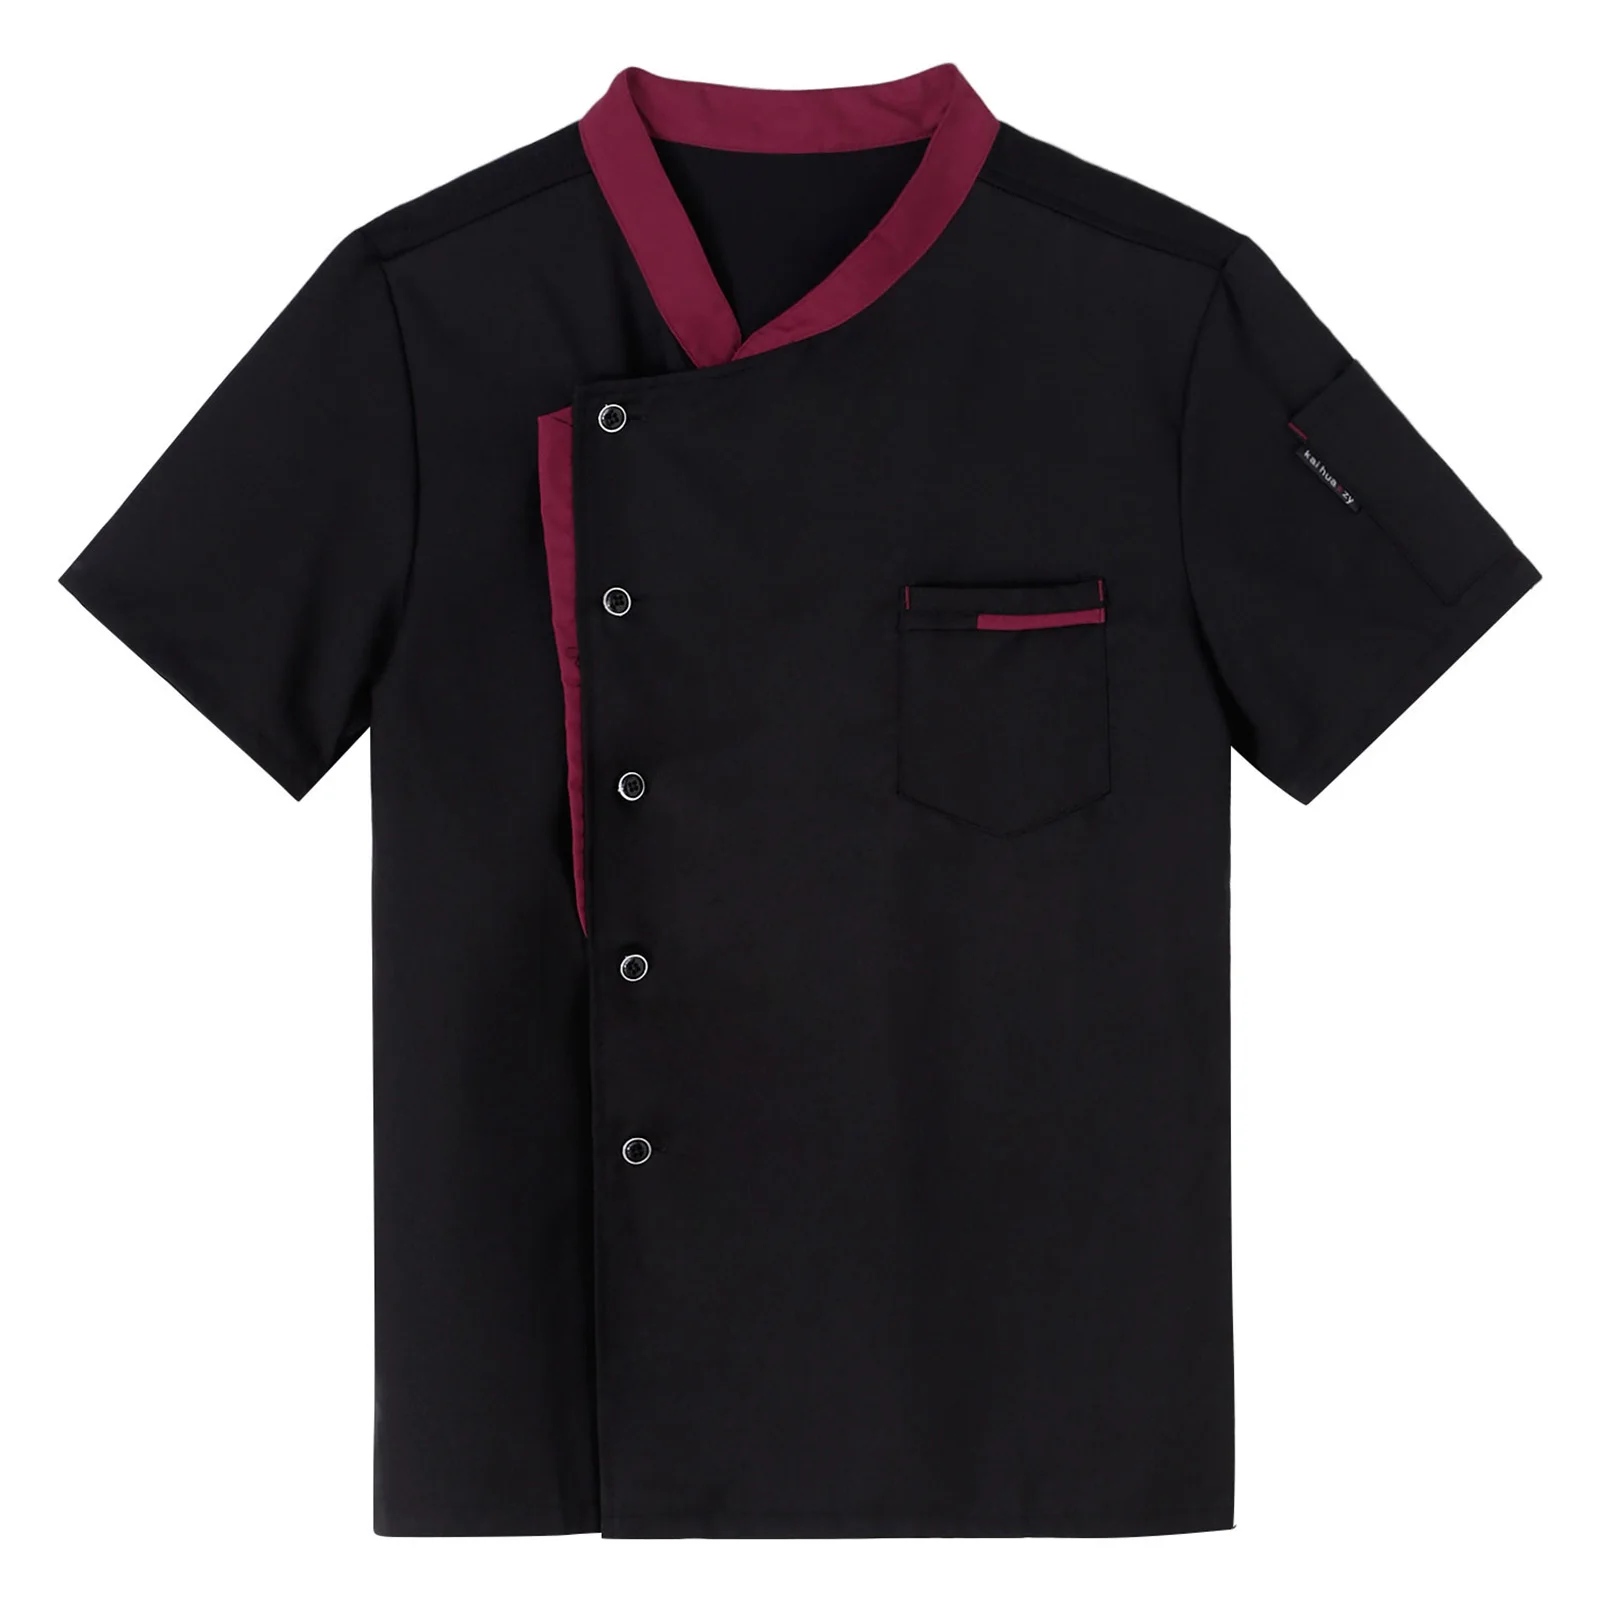 Details about   Chef Jacket Top Coat Catering Uniform Workwear Waiter Hotel Restaurant Bake Home 